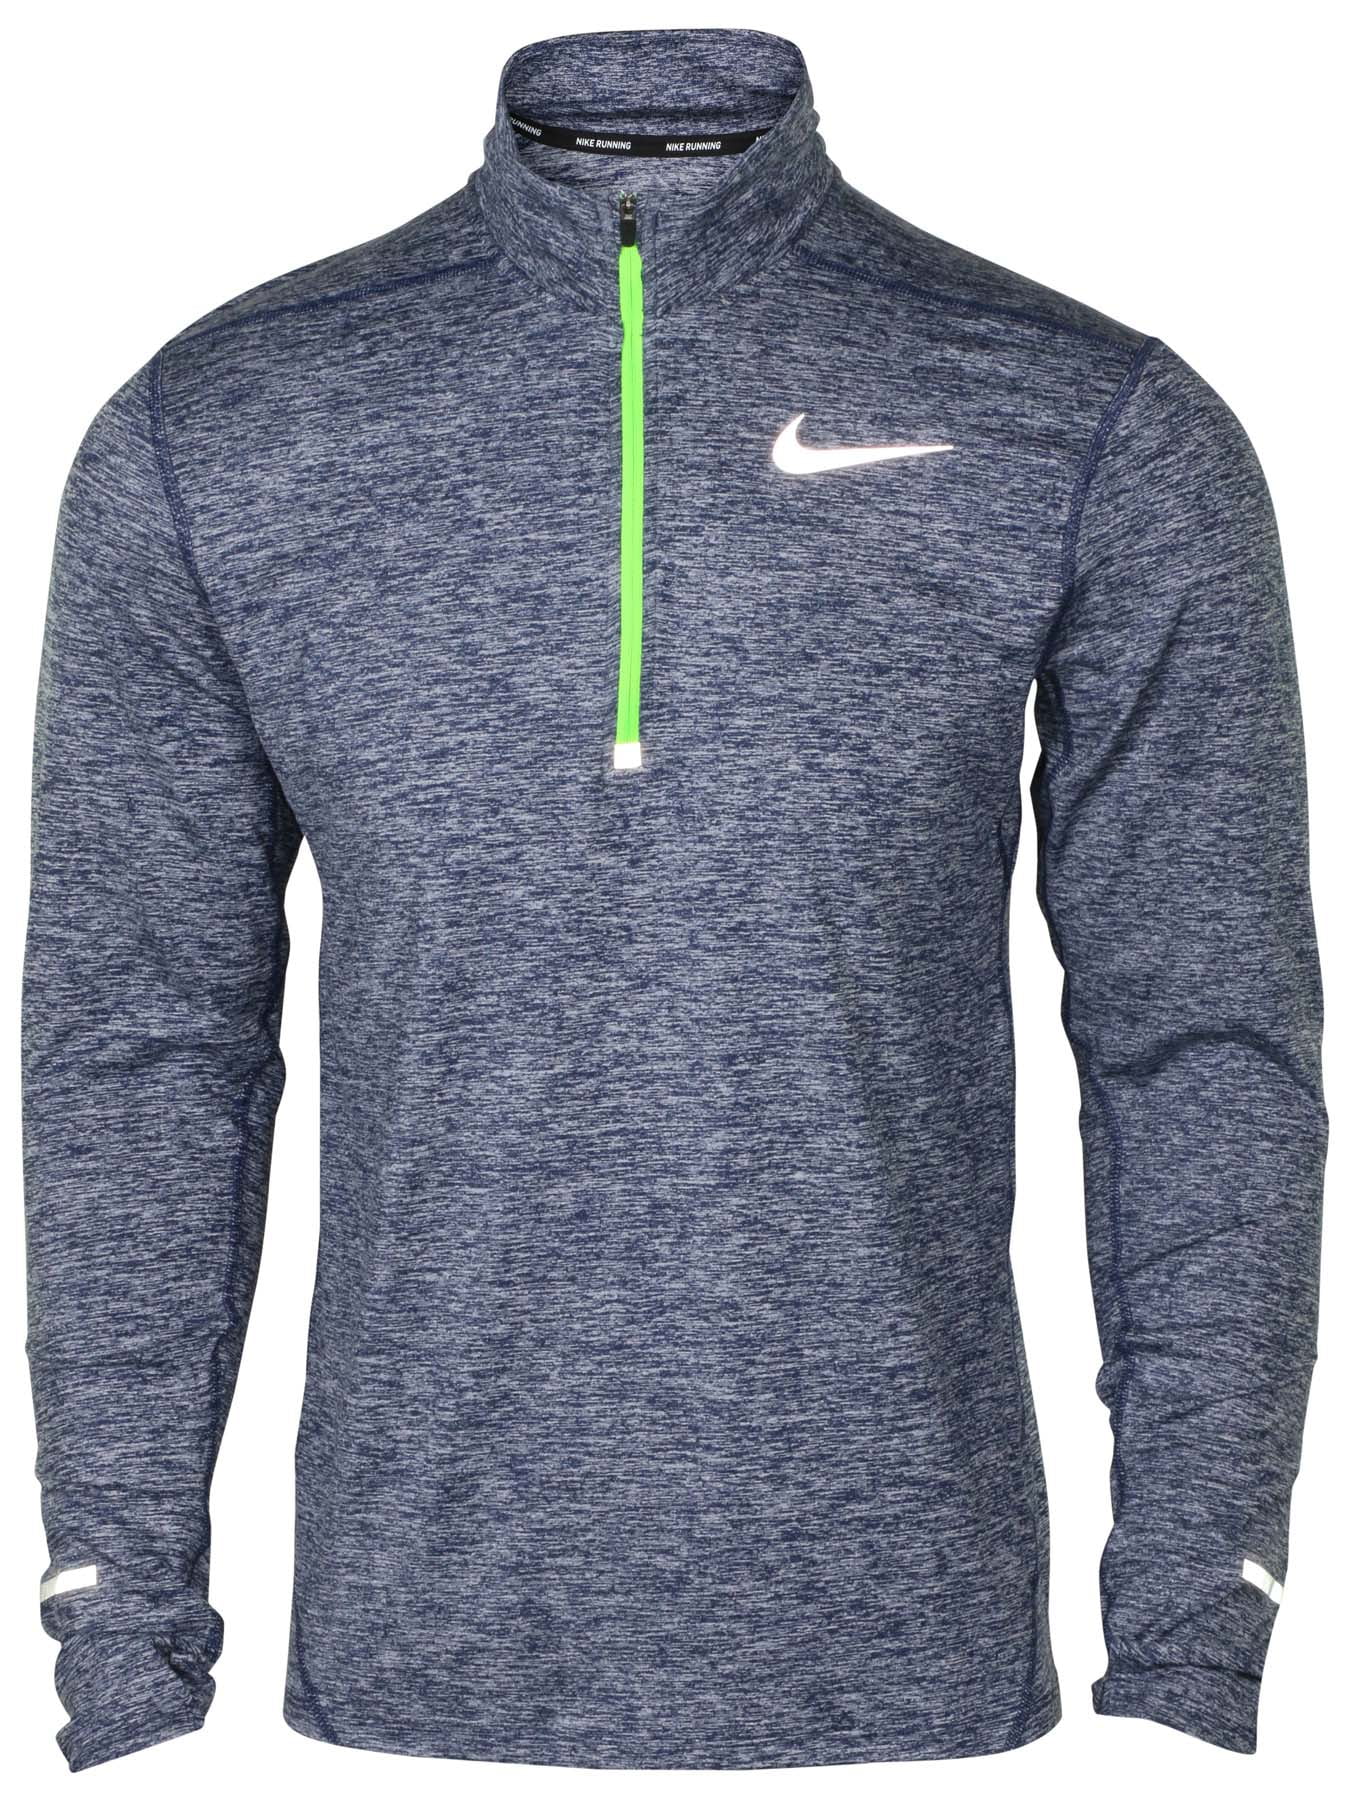 Nike - Nike Men's Dri-Fit Element 1/2 Zip Running Top - Walmart.com ...